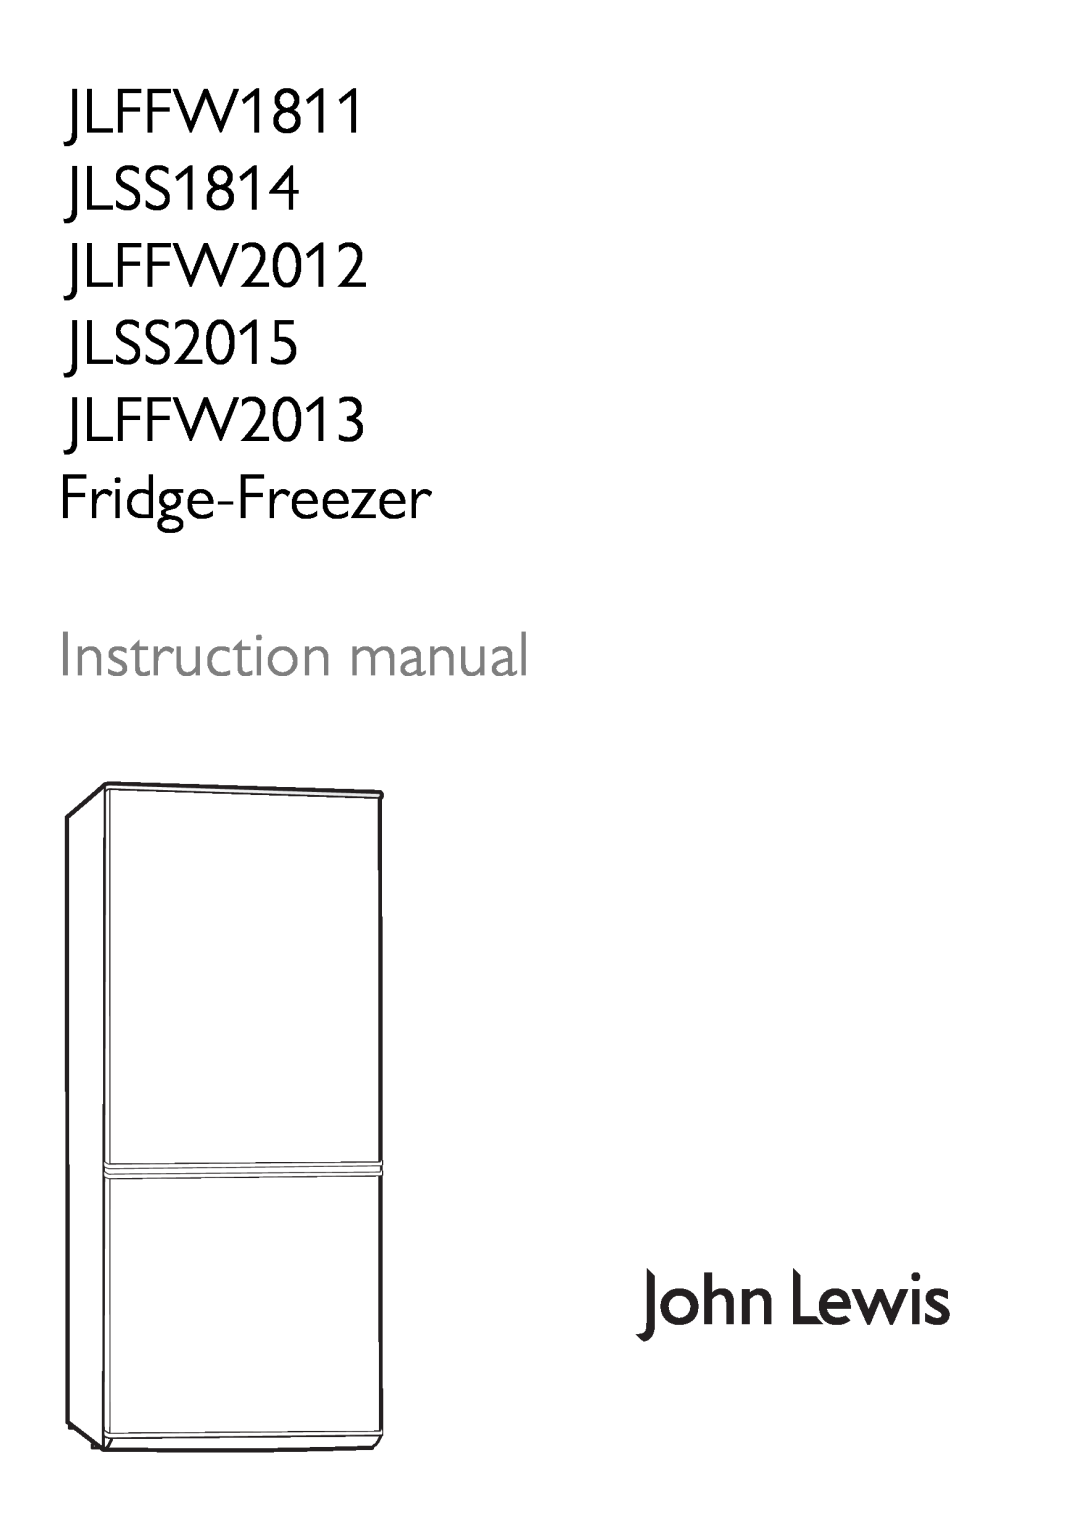 John Lewis JLFFW2013 instruction manual JLFFW1811 JLSS1814 JLFFW2012 JLSS2015, Instruction manual 